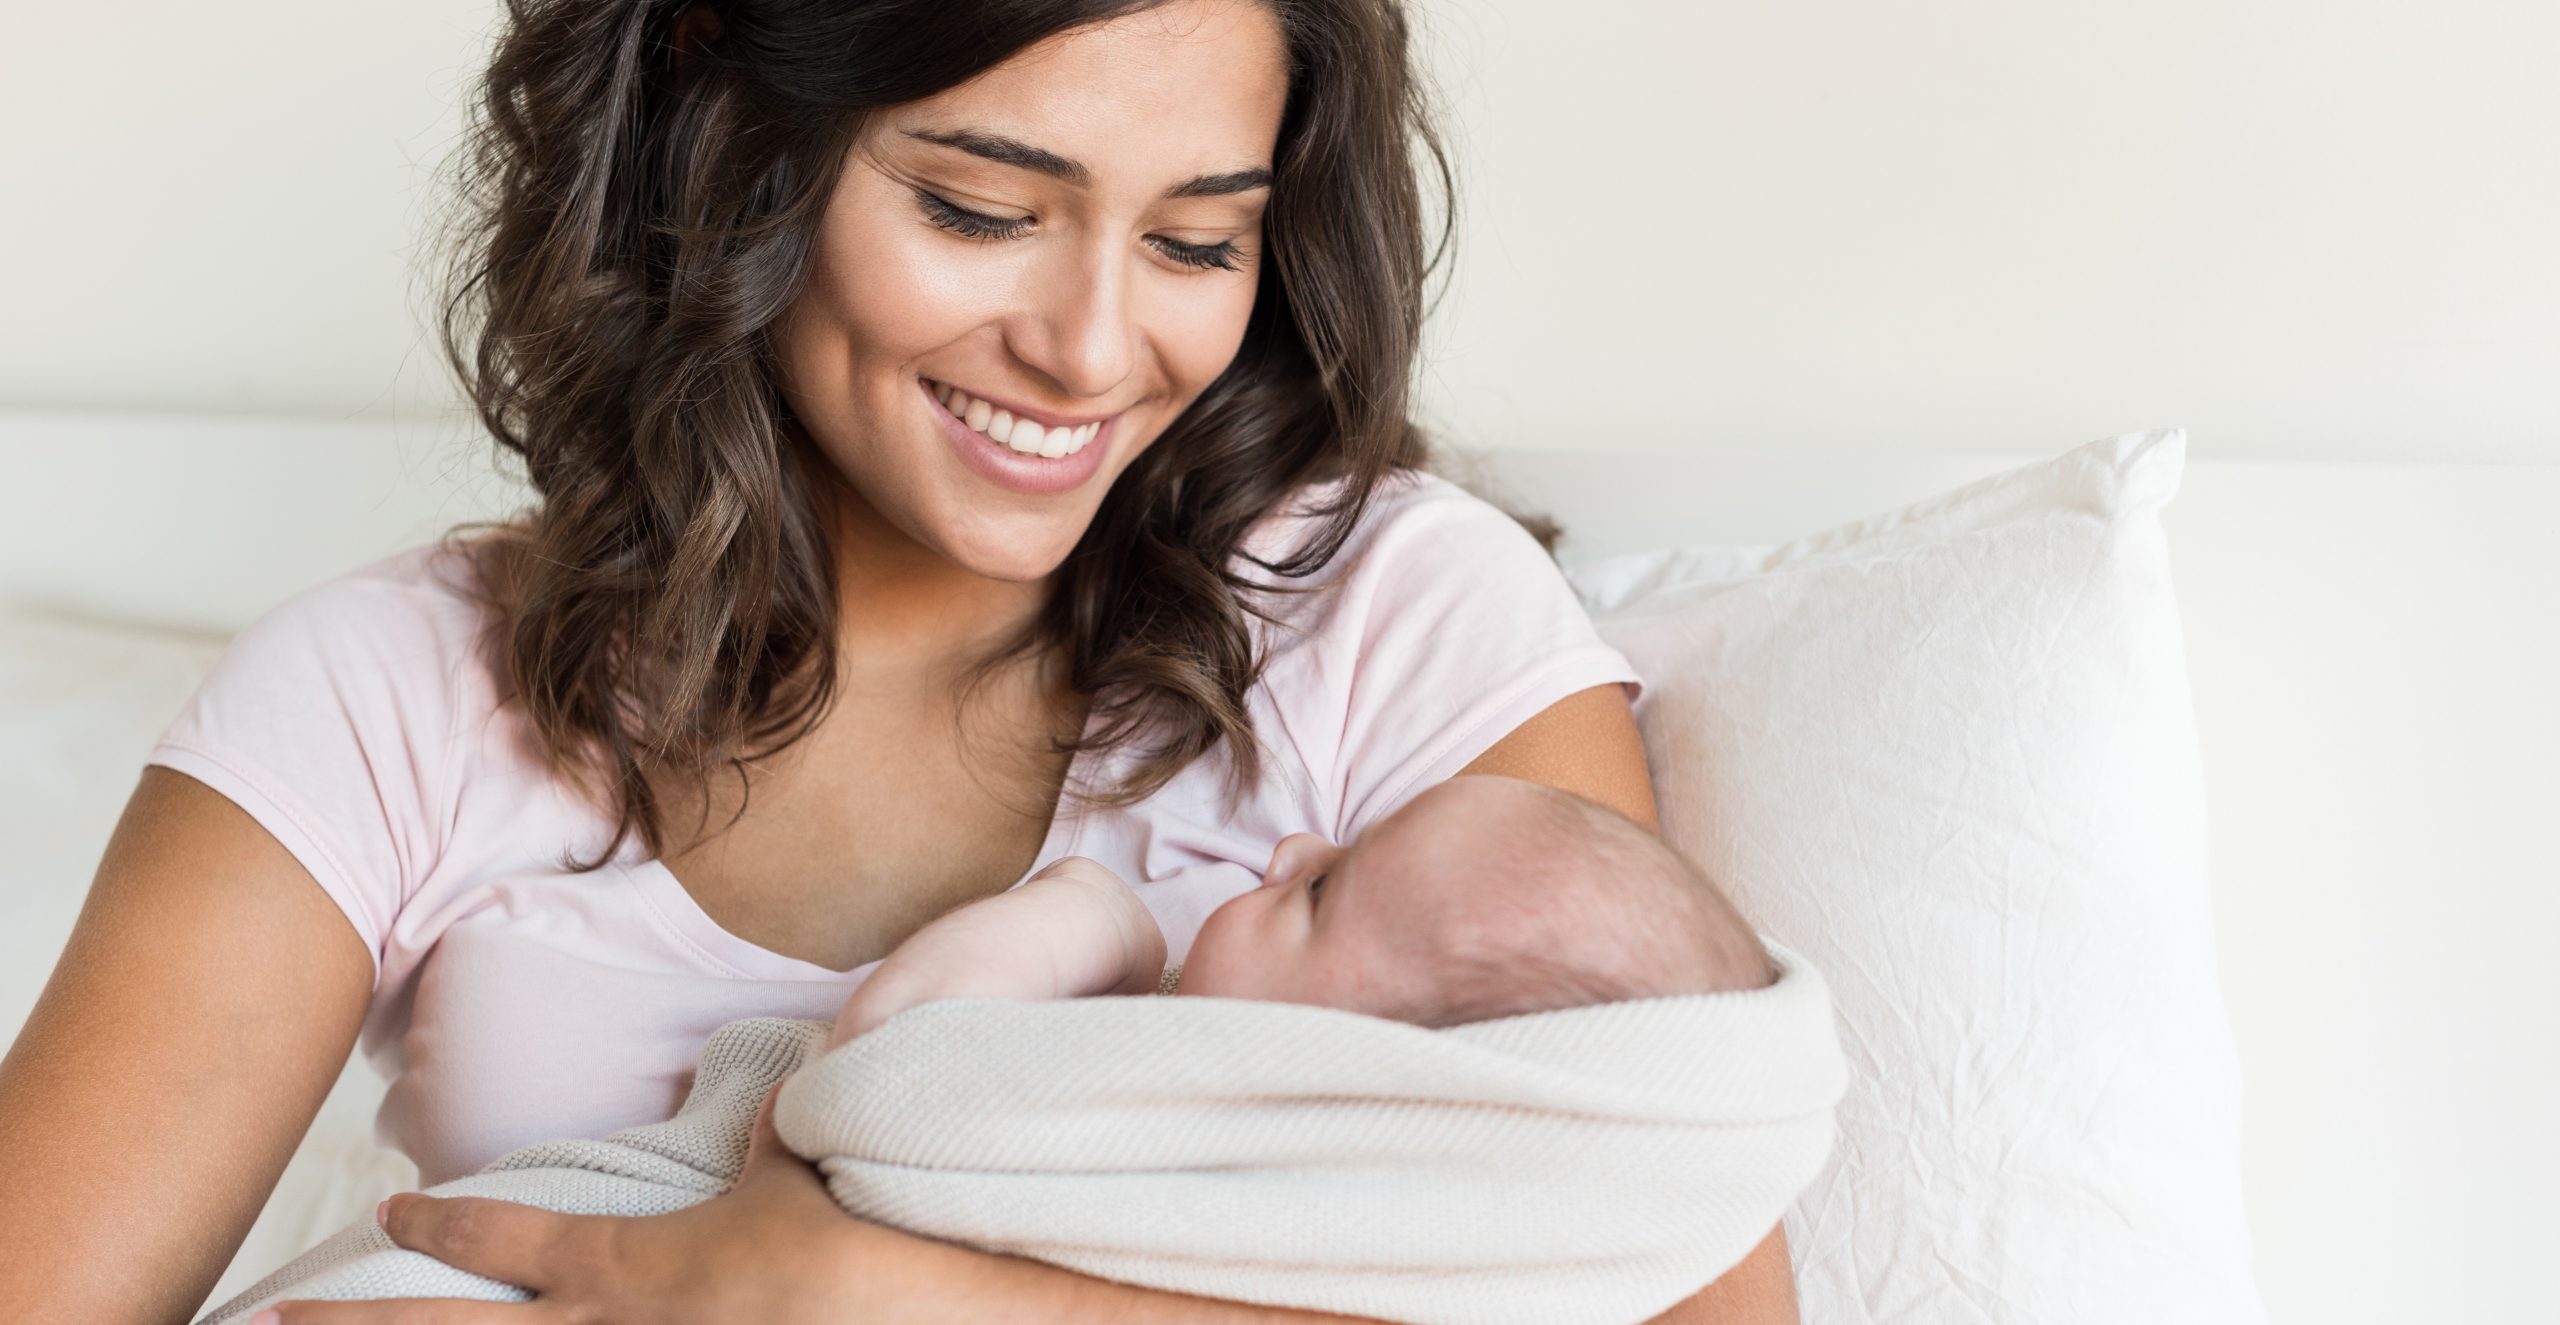 postpartum doctor visits cost